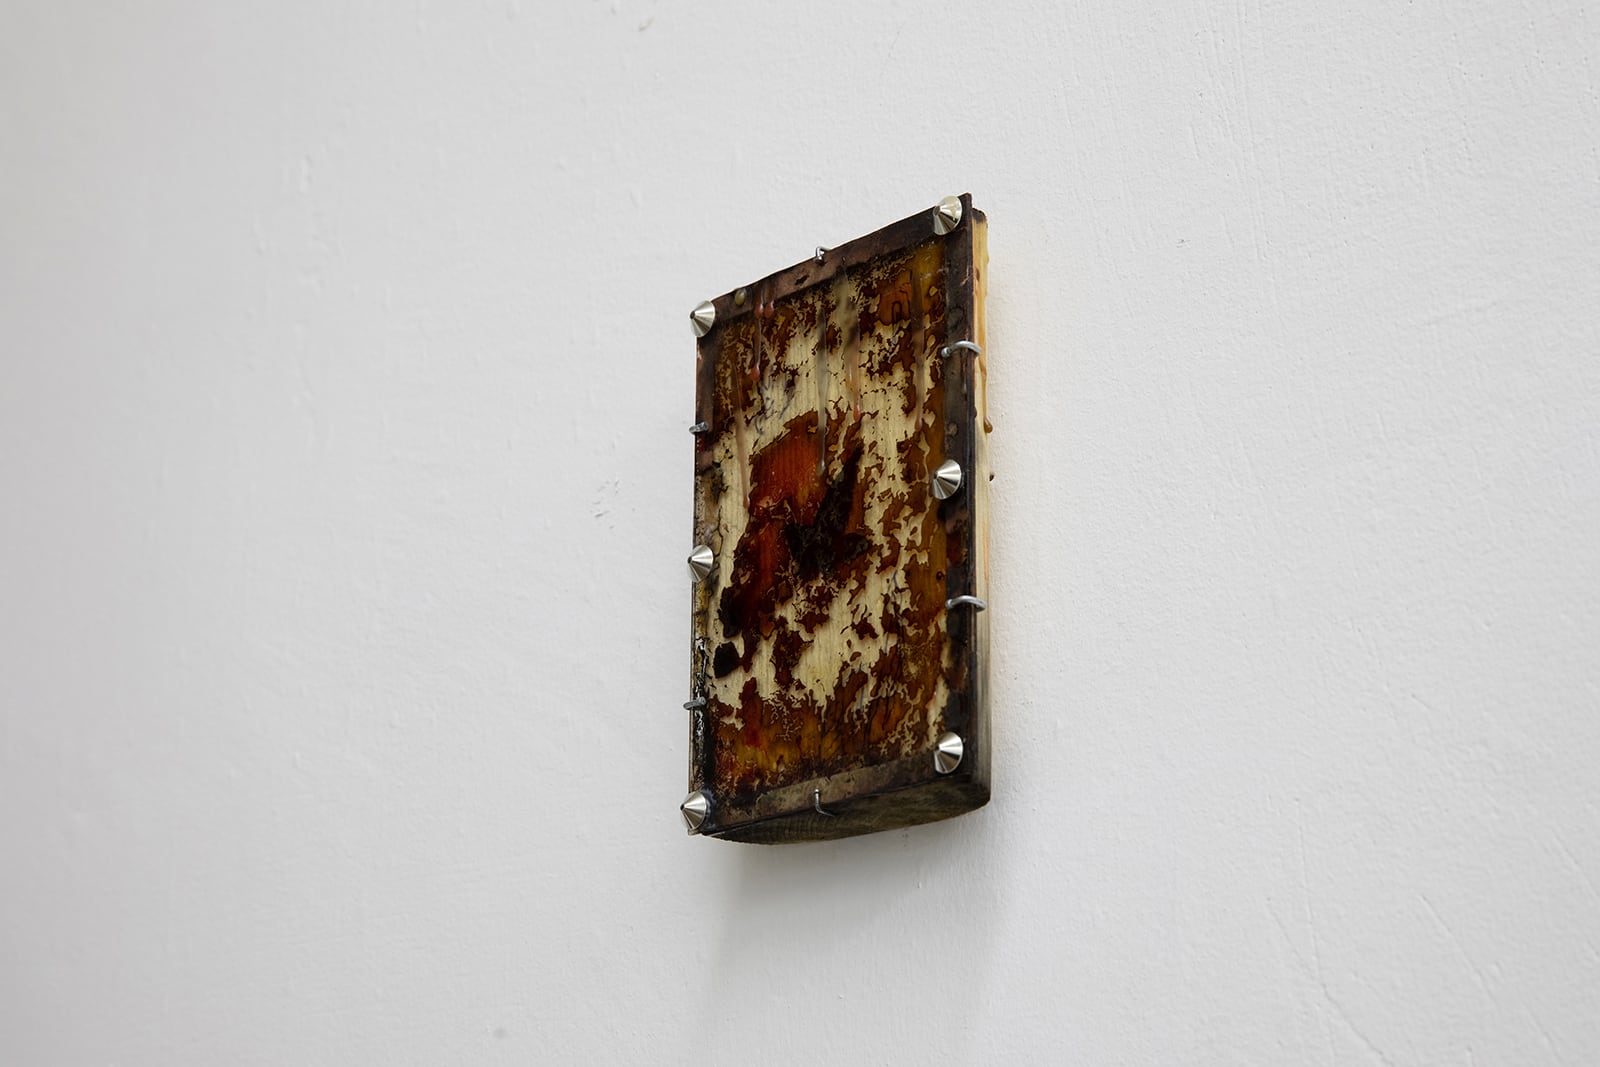 Anna Taganzeva-Kobzeva, Inferno, 2021, mixed media, wood, glass, metal, 13 x 9 cm